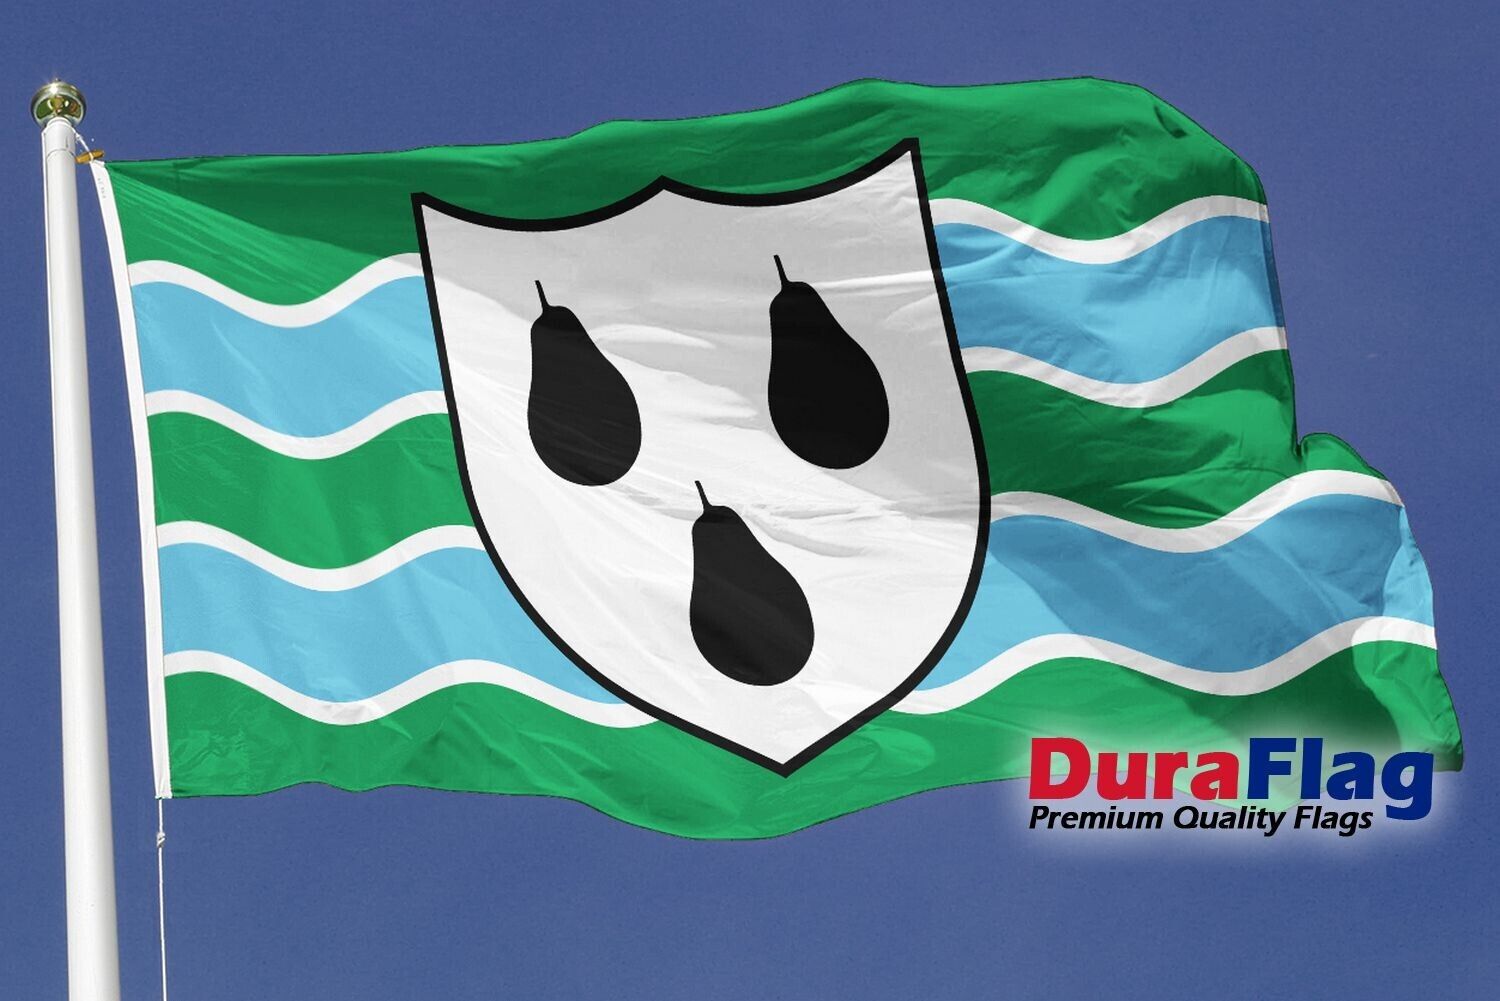 Worcestershire (New) Duraflag Premium Quality (20x12inch) Flag